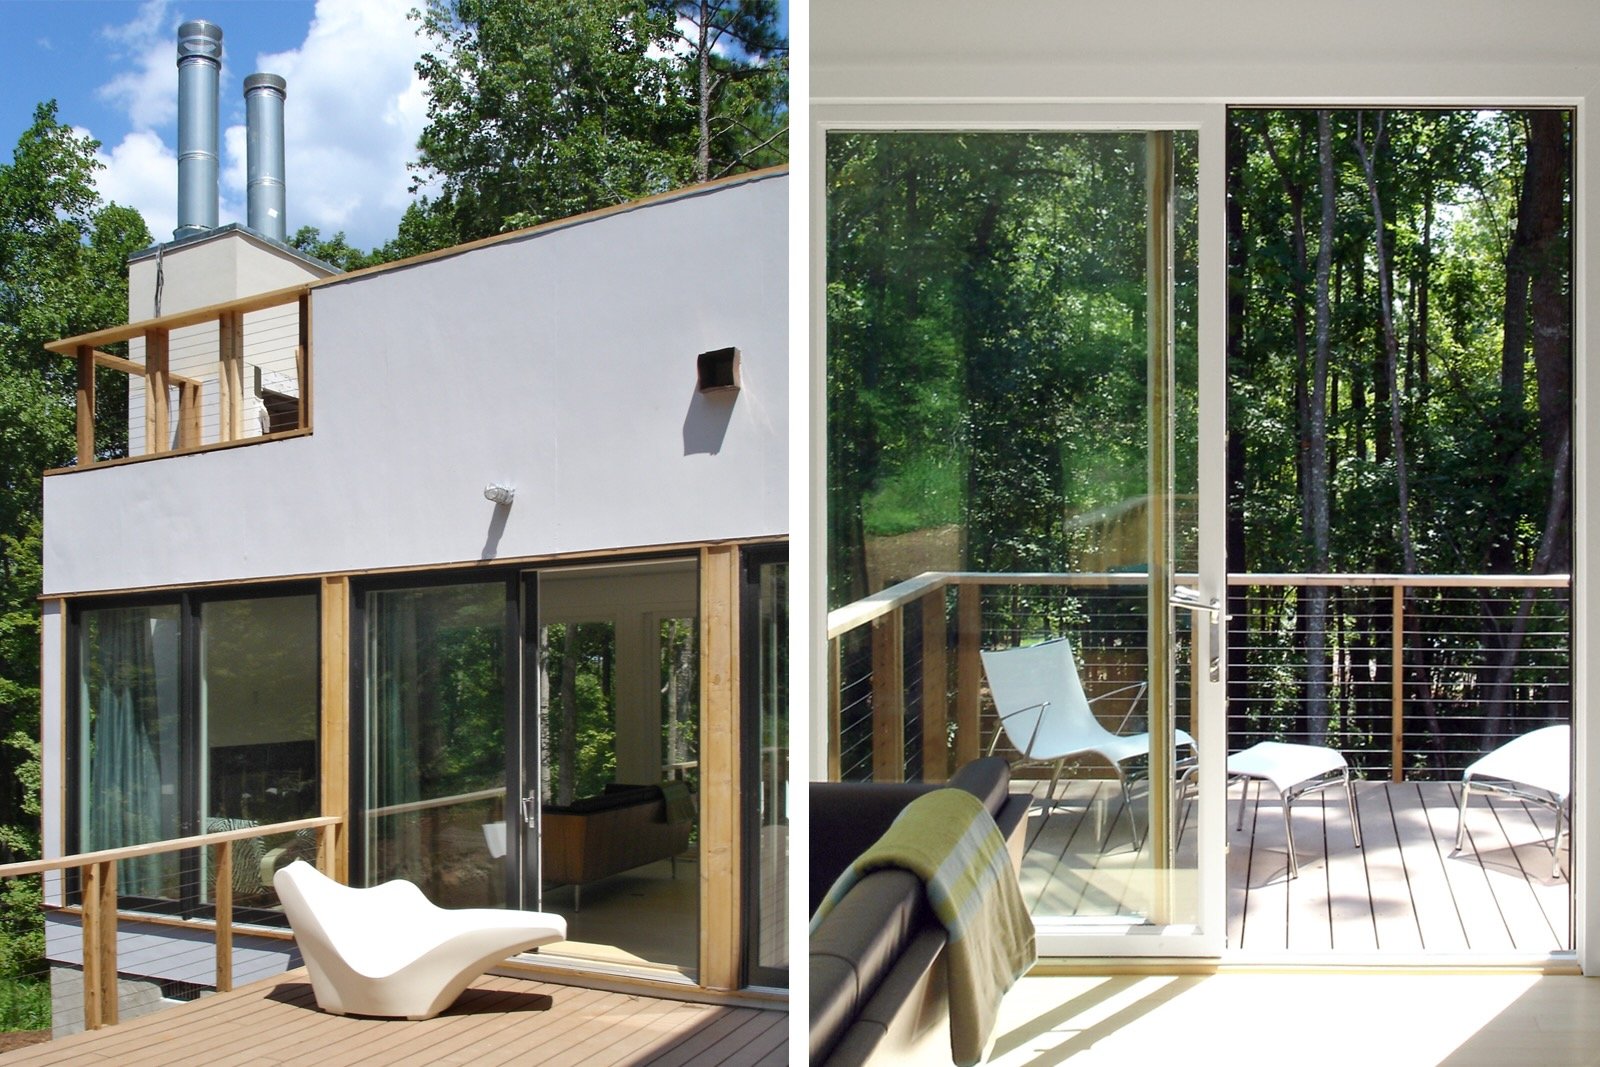 05-res4-resolution-4-architecture-modern-modular-prefab-home-dwell-exterior-interior.jpeg